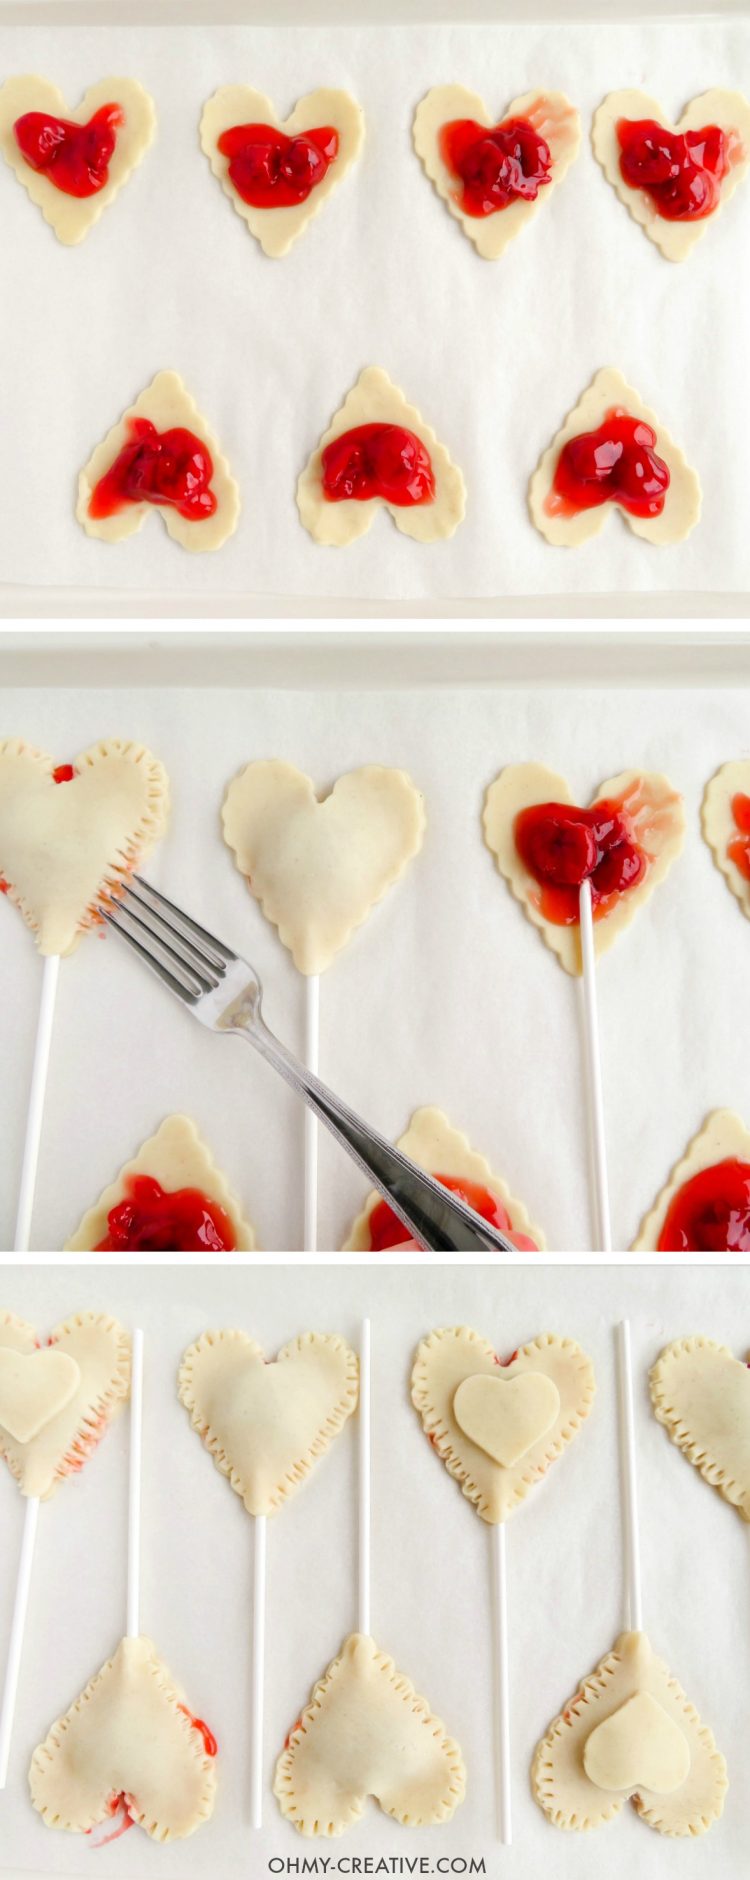 Mini Cherry Pies - Heart Pie Pops - A sweet Valentine's Day Treat! OHMY-CREATIVE.COM | Heart Shaped | Valentine's Day Dessert | Pie Pops | Pie Crust | Cherry Pie | Pillsbury Pie Crust | Premade Pie Crust | Sprinkles | Handheld pies | Mini Pies | Heart